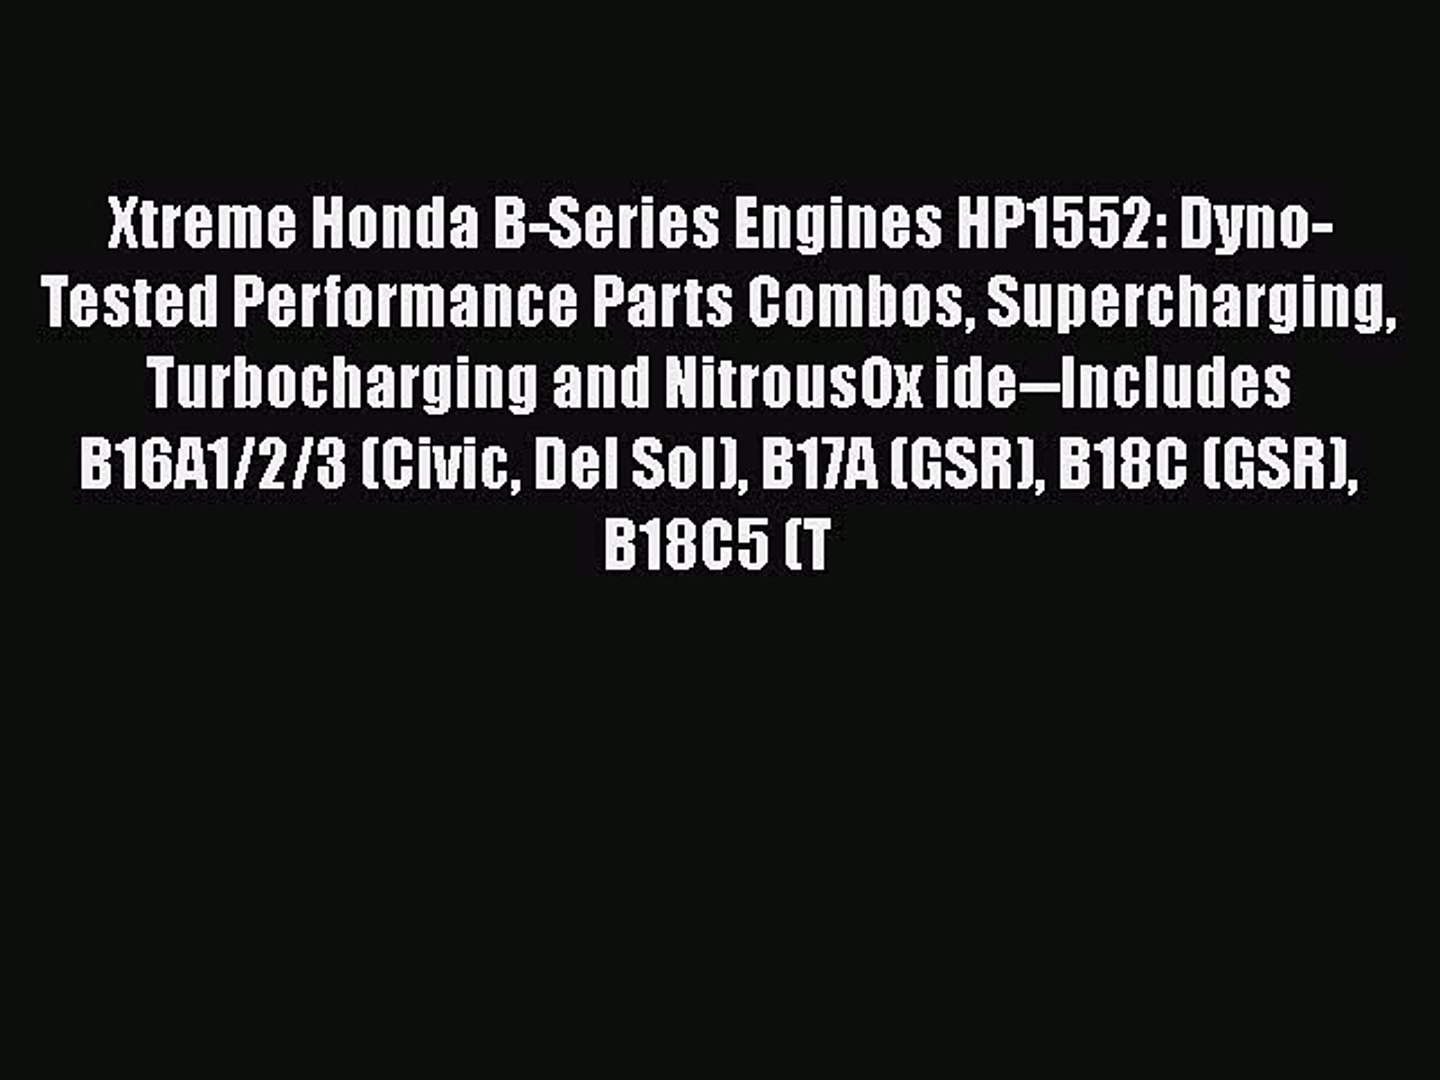 Xtreme honda b-series engines hp1552 download 2017